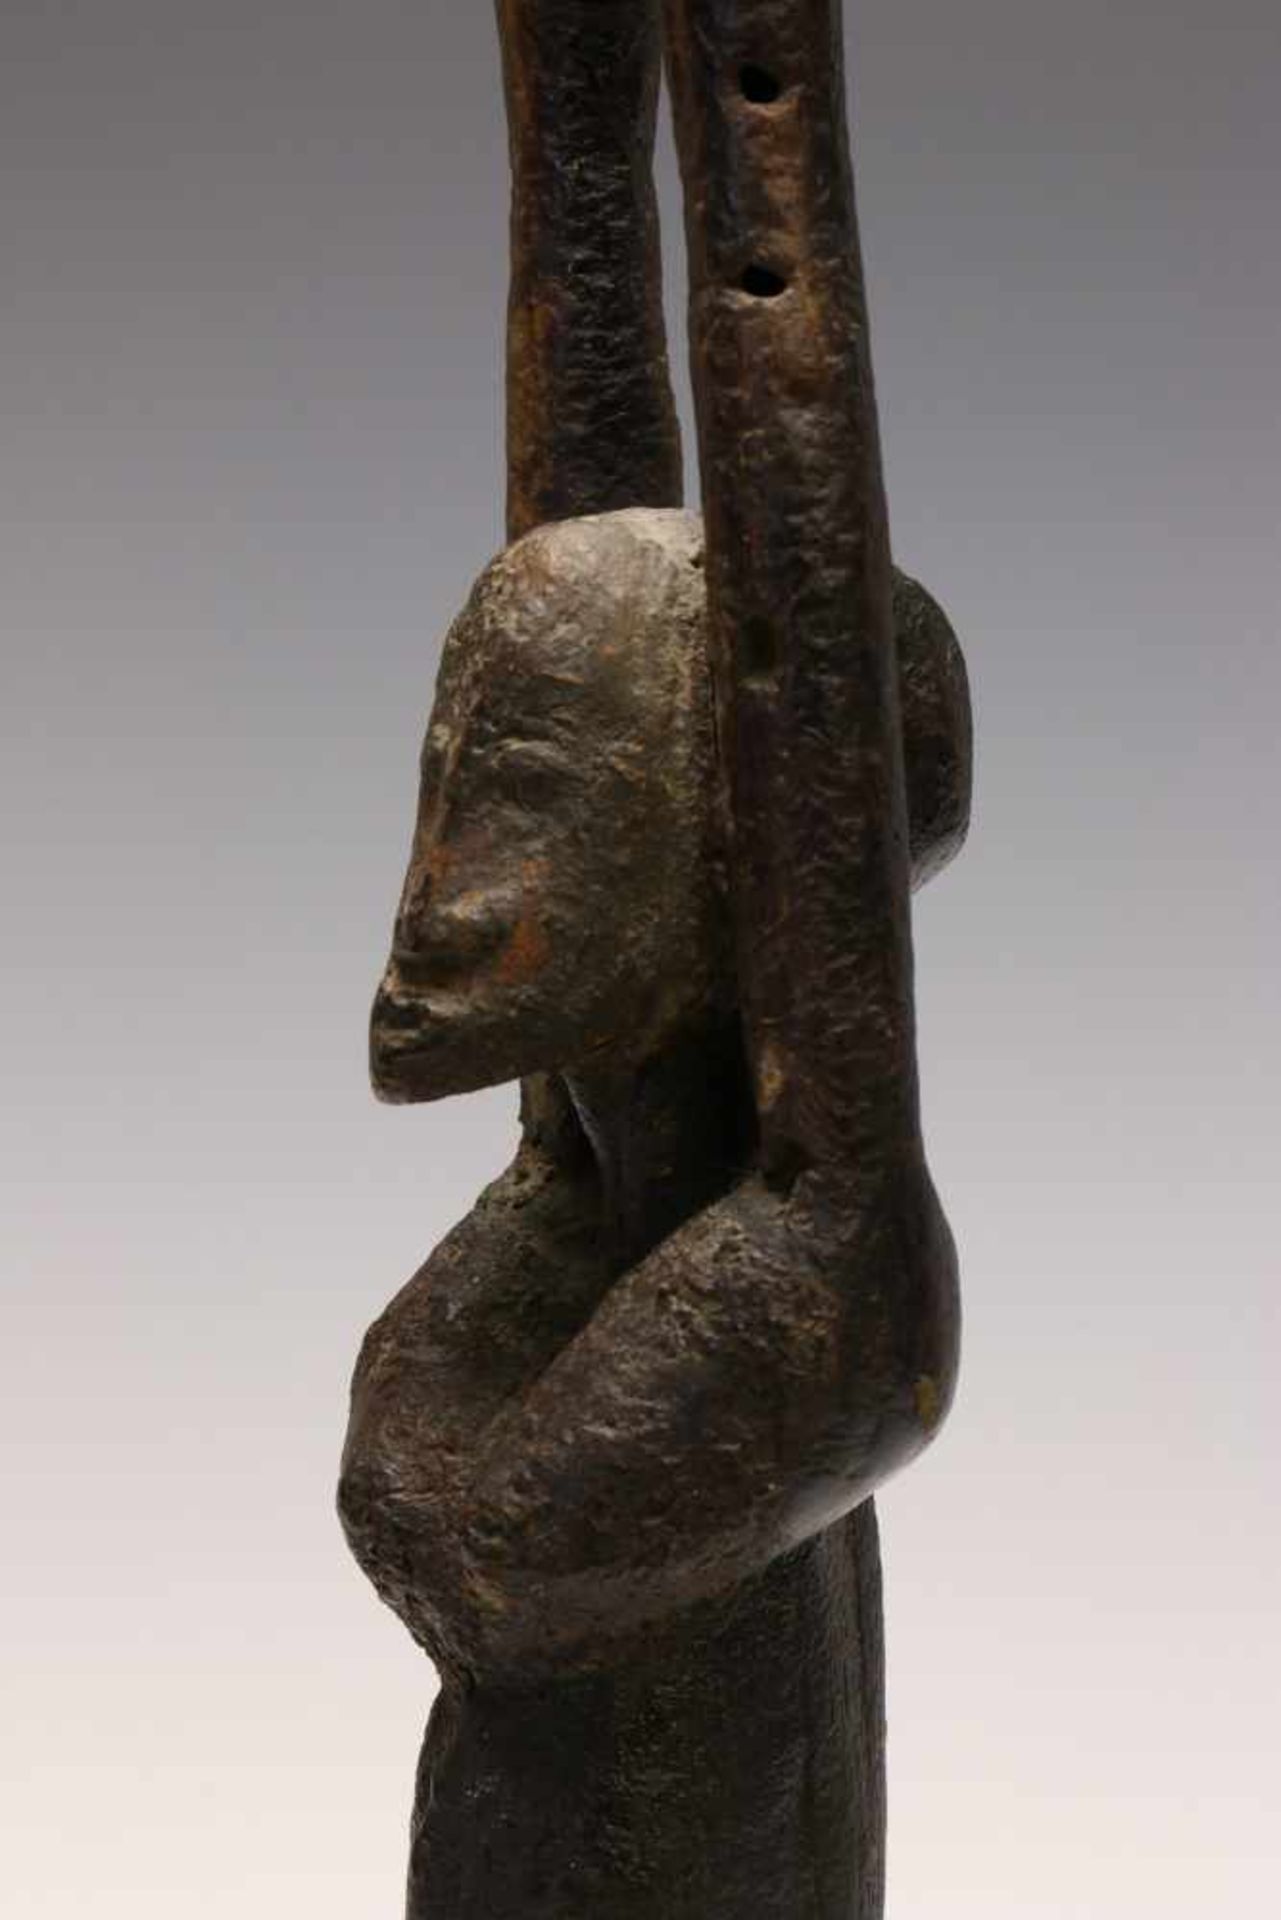 Dogon, standing antropomorphic figure,with raised arms and dark oily patina. Provenance, Steven de - Bild 2 aus 6